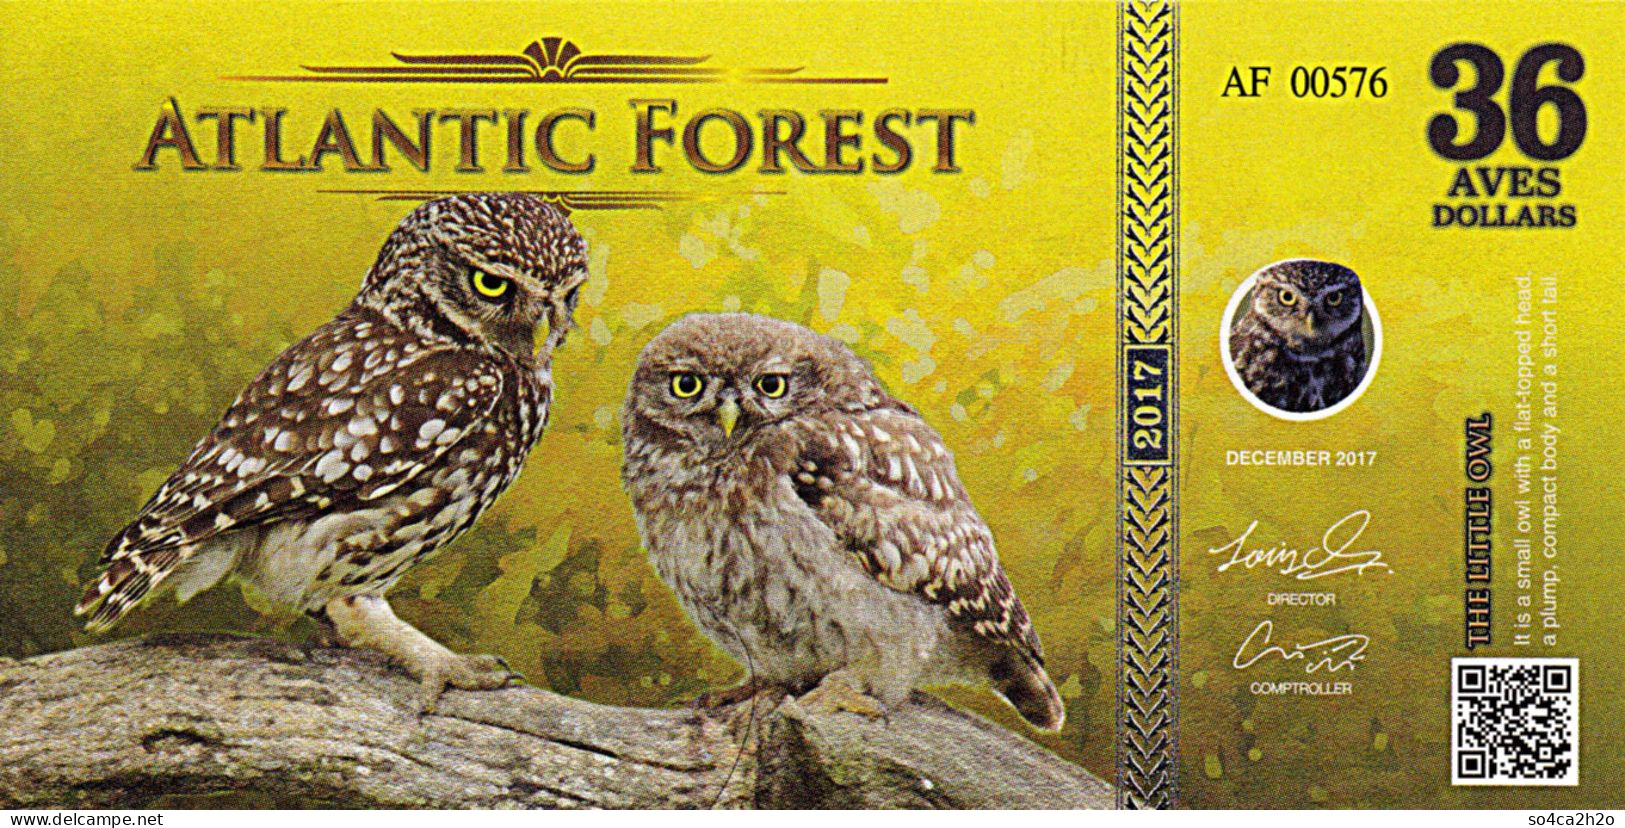 Atlantic Forest 36 Aves Dollars UNC 2017 Chouette Athena - Specimen